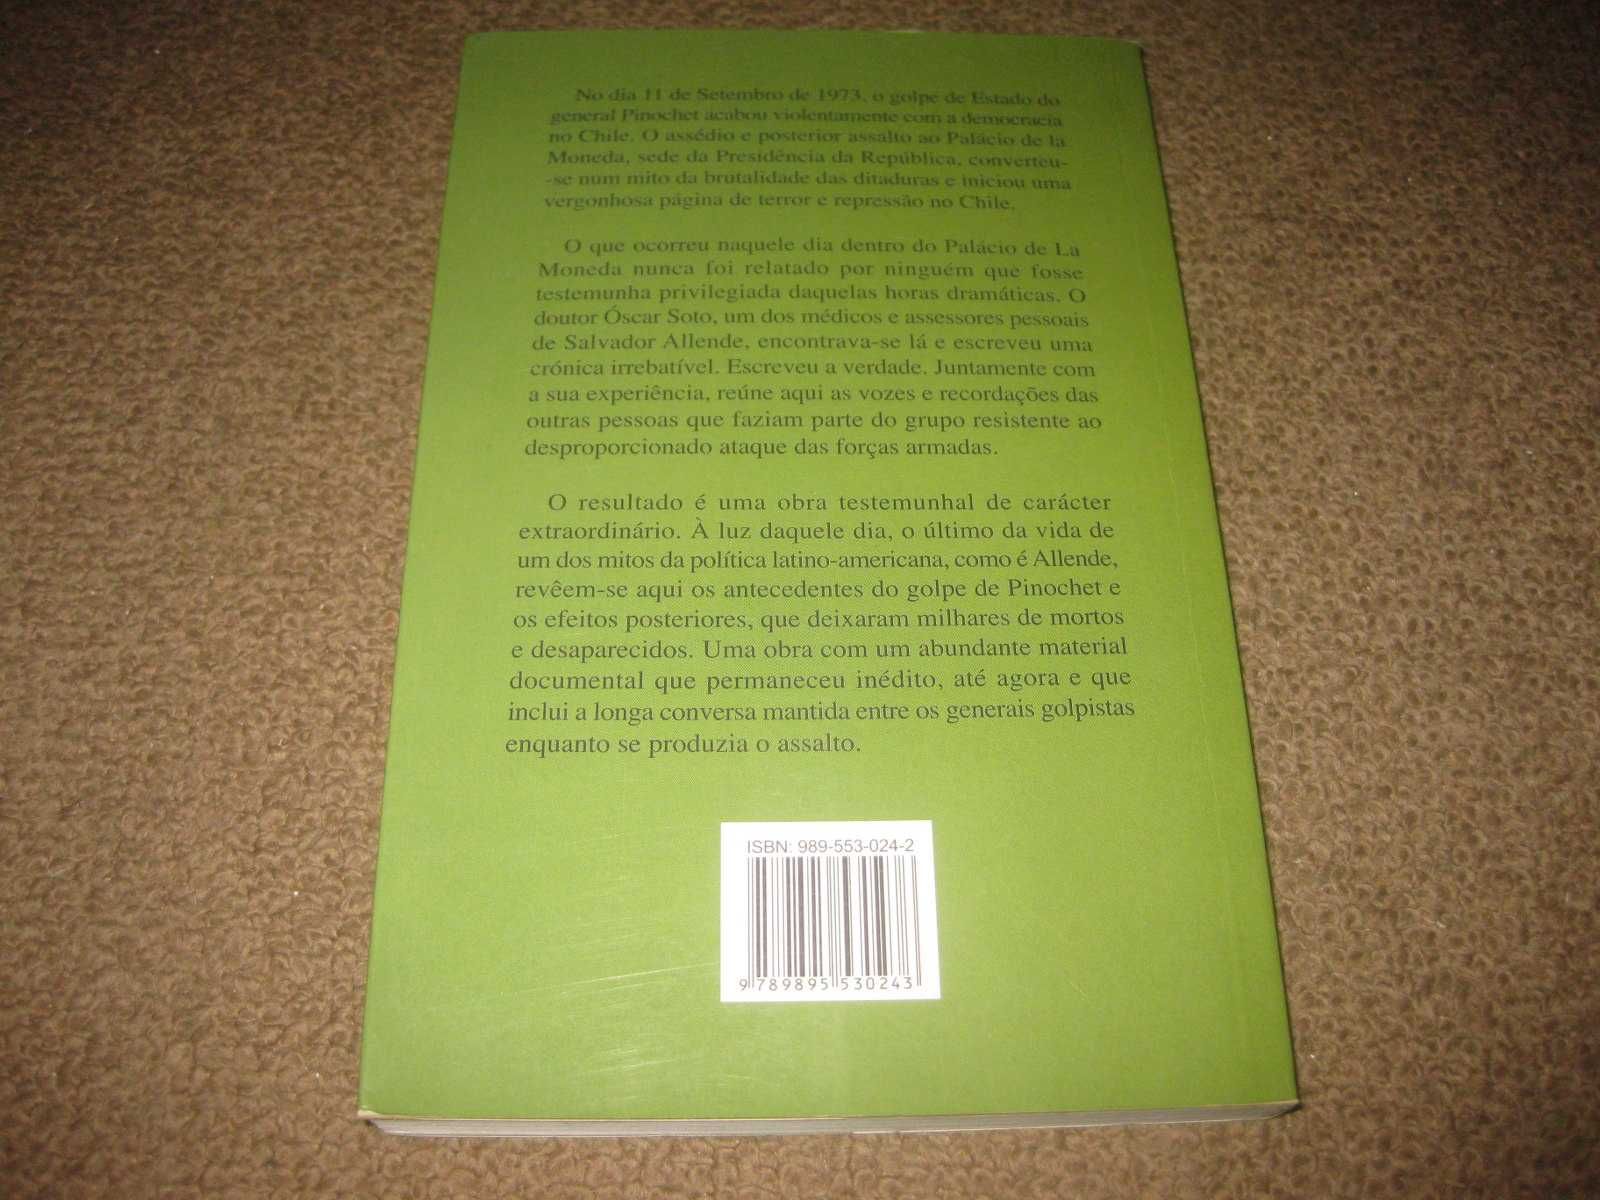 Livro "O Último Dia de Salvador Allende" de Óscar Soto